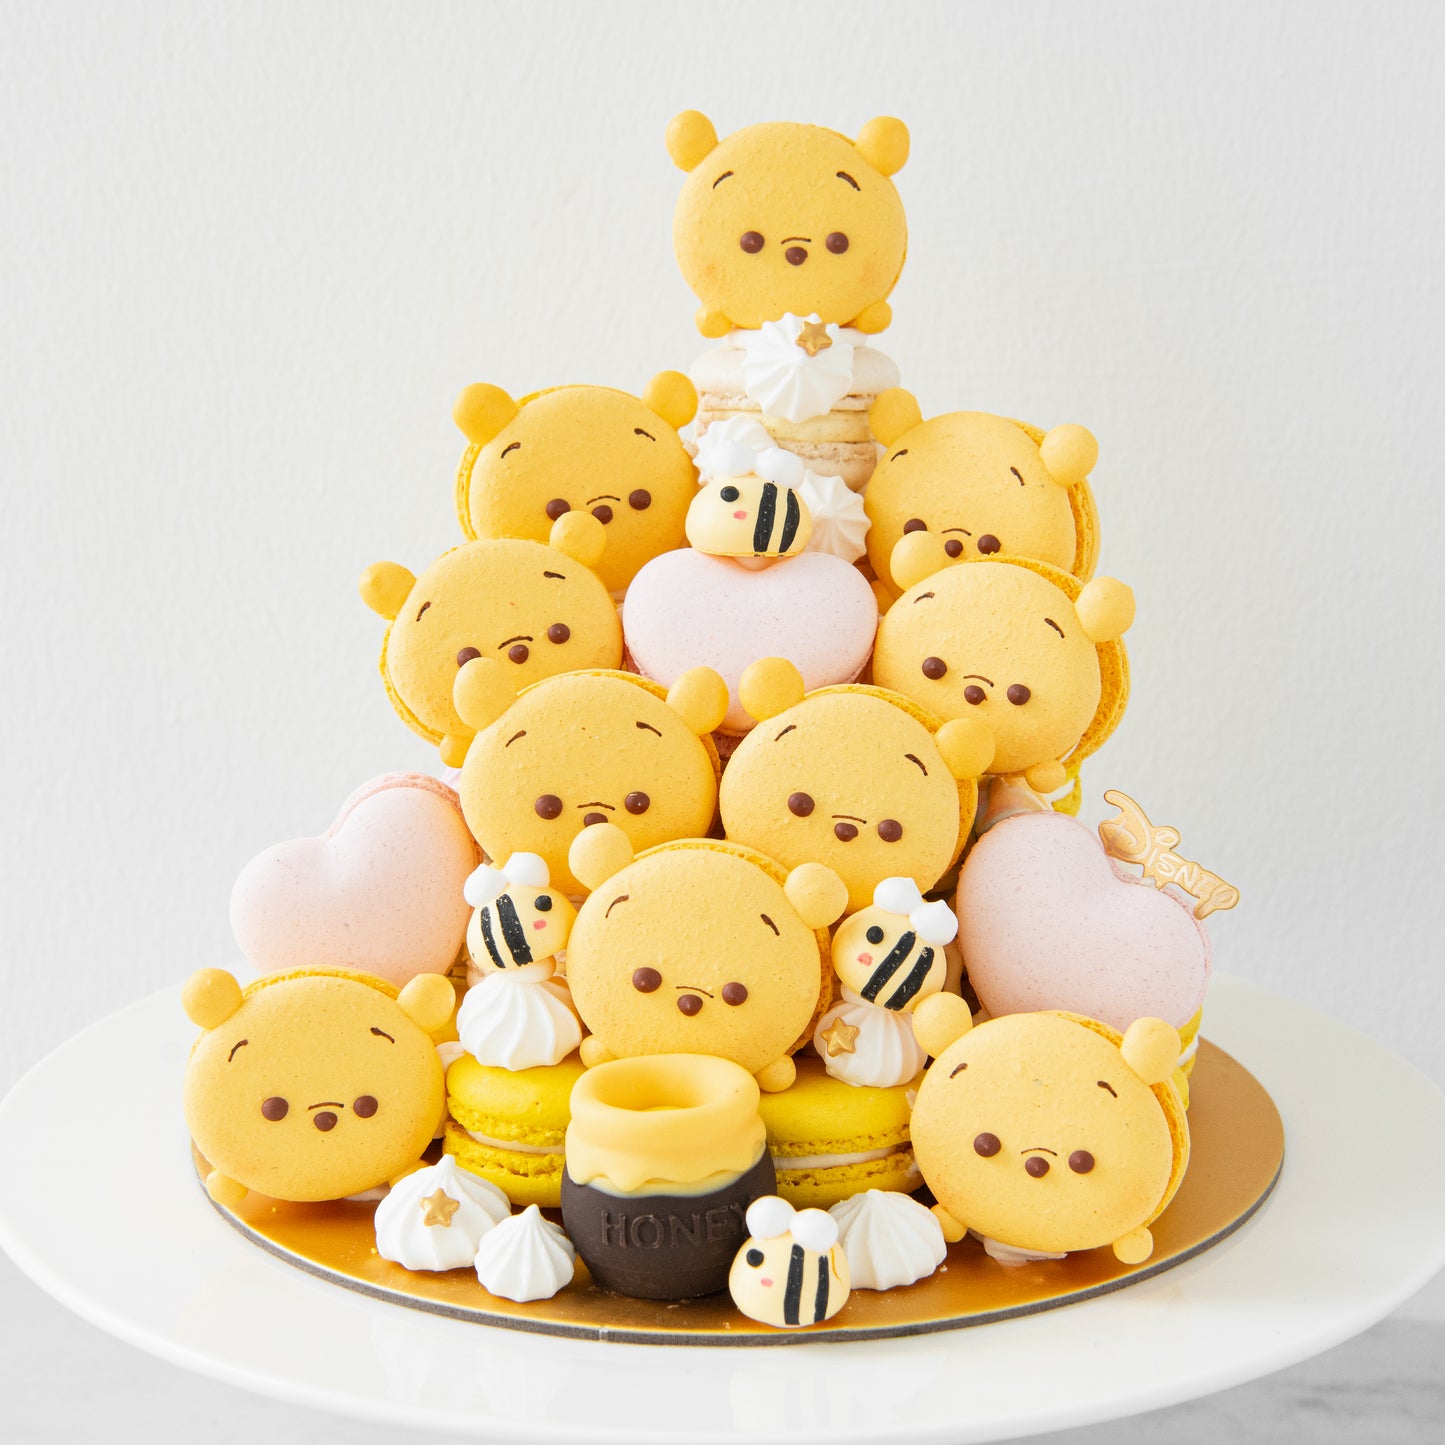 Disney Winnie The Pooh Macaron Tower Set | $168 Nett